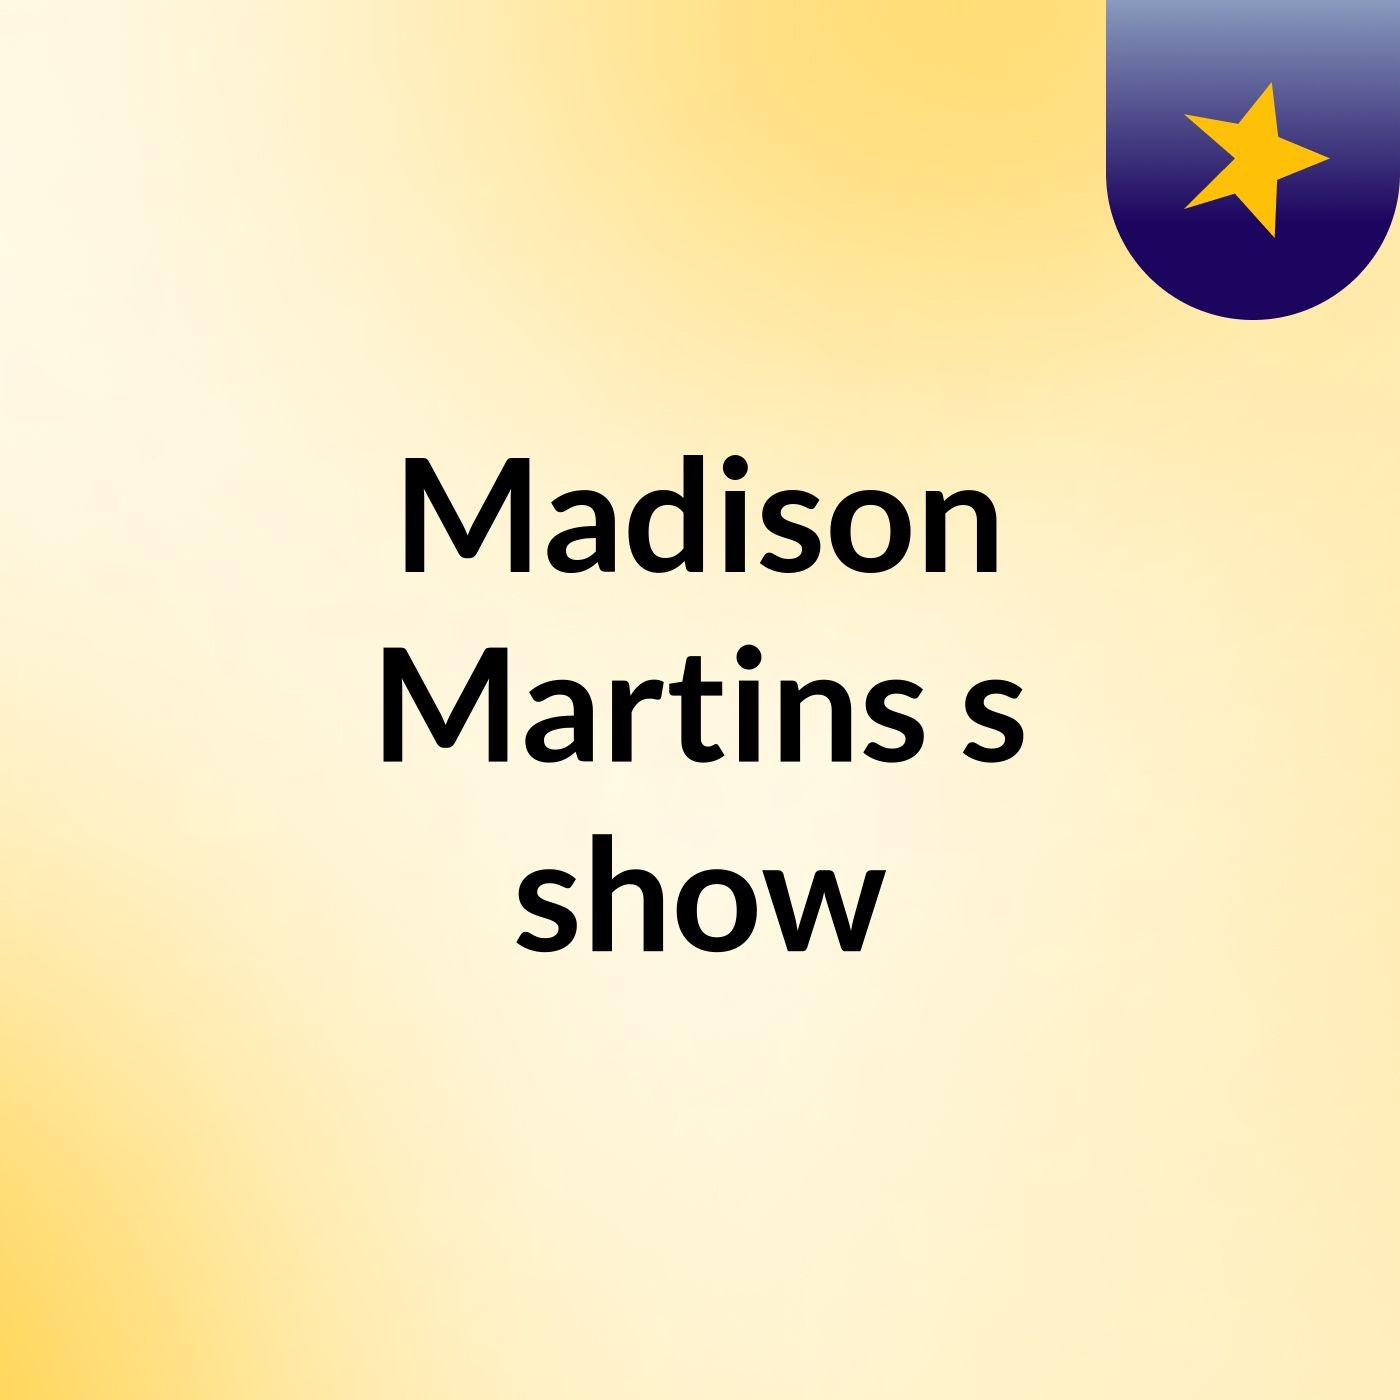 Madison Martins's show